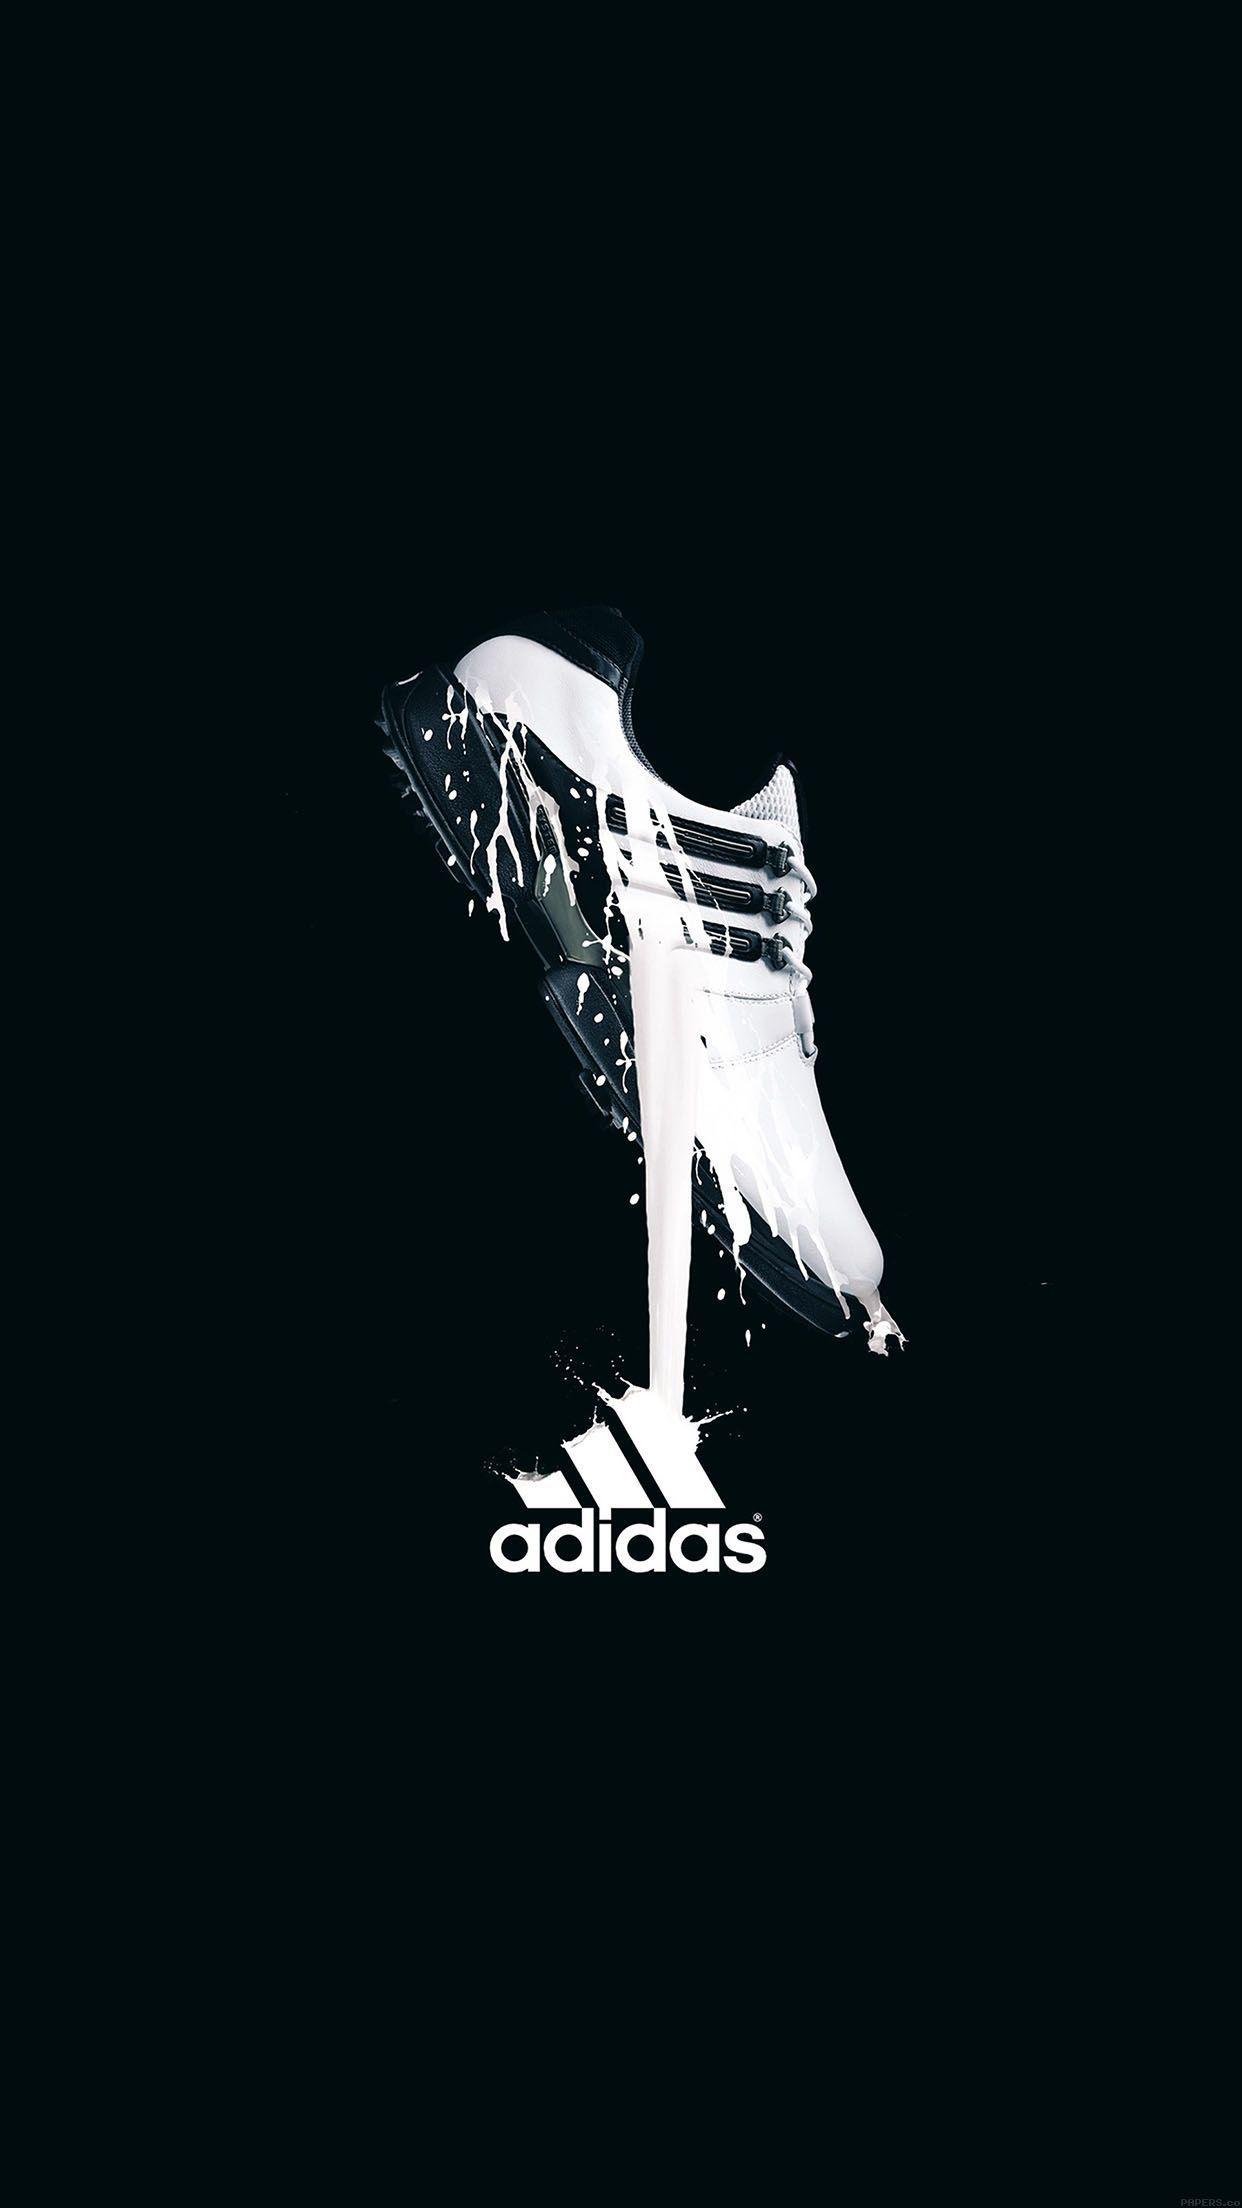 adidas logo iphone wallpaper